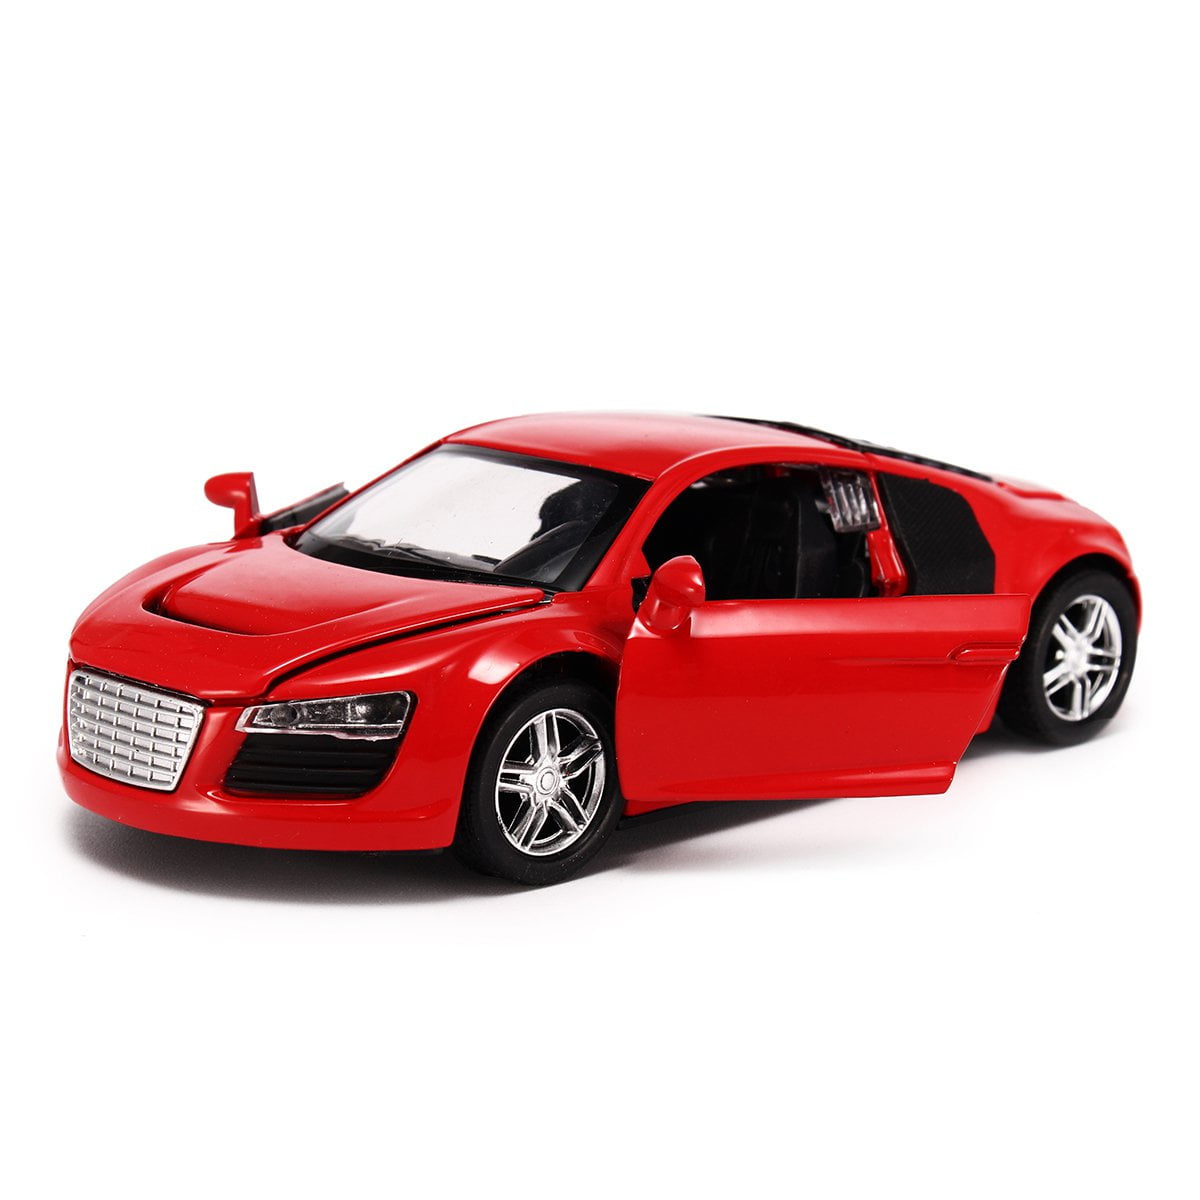 Audi GT Racing Car Model 1:32 Diecast Simulation Alloy Sound&Light Gift audi Toy